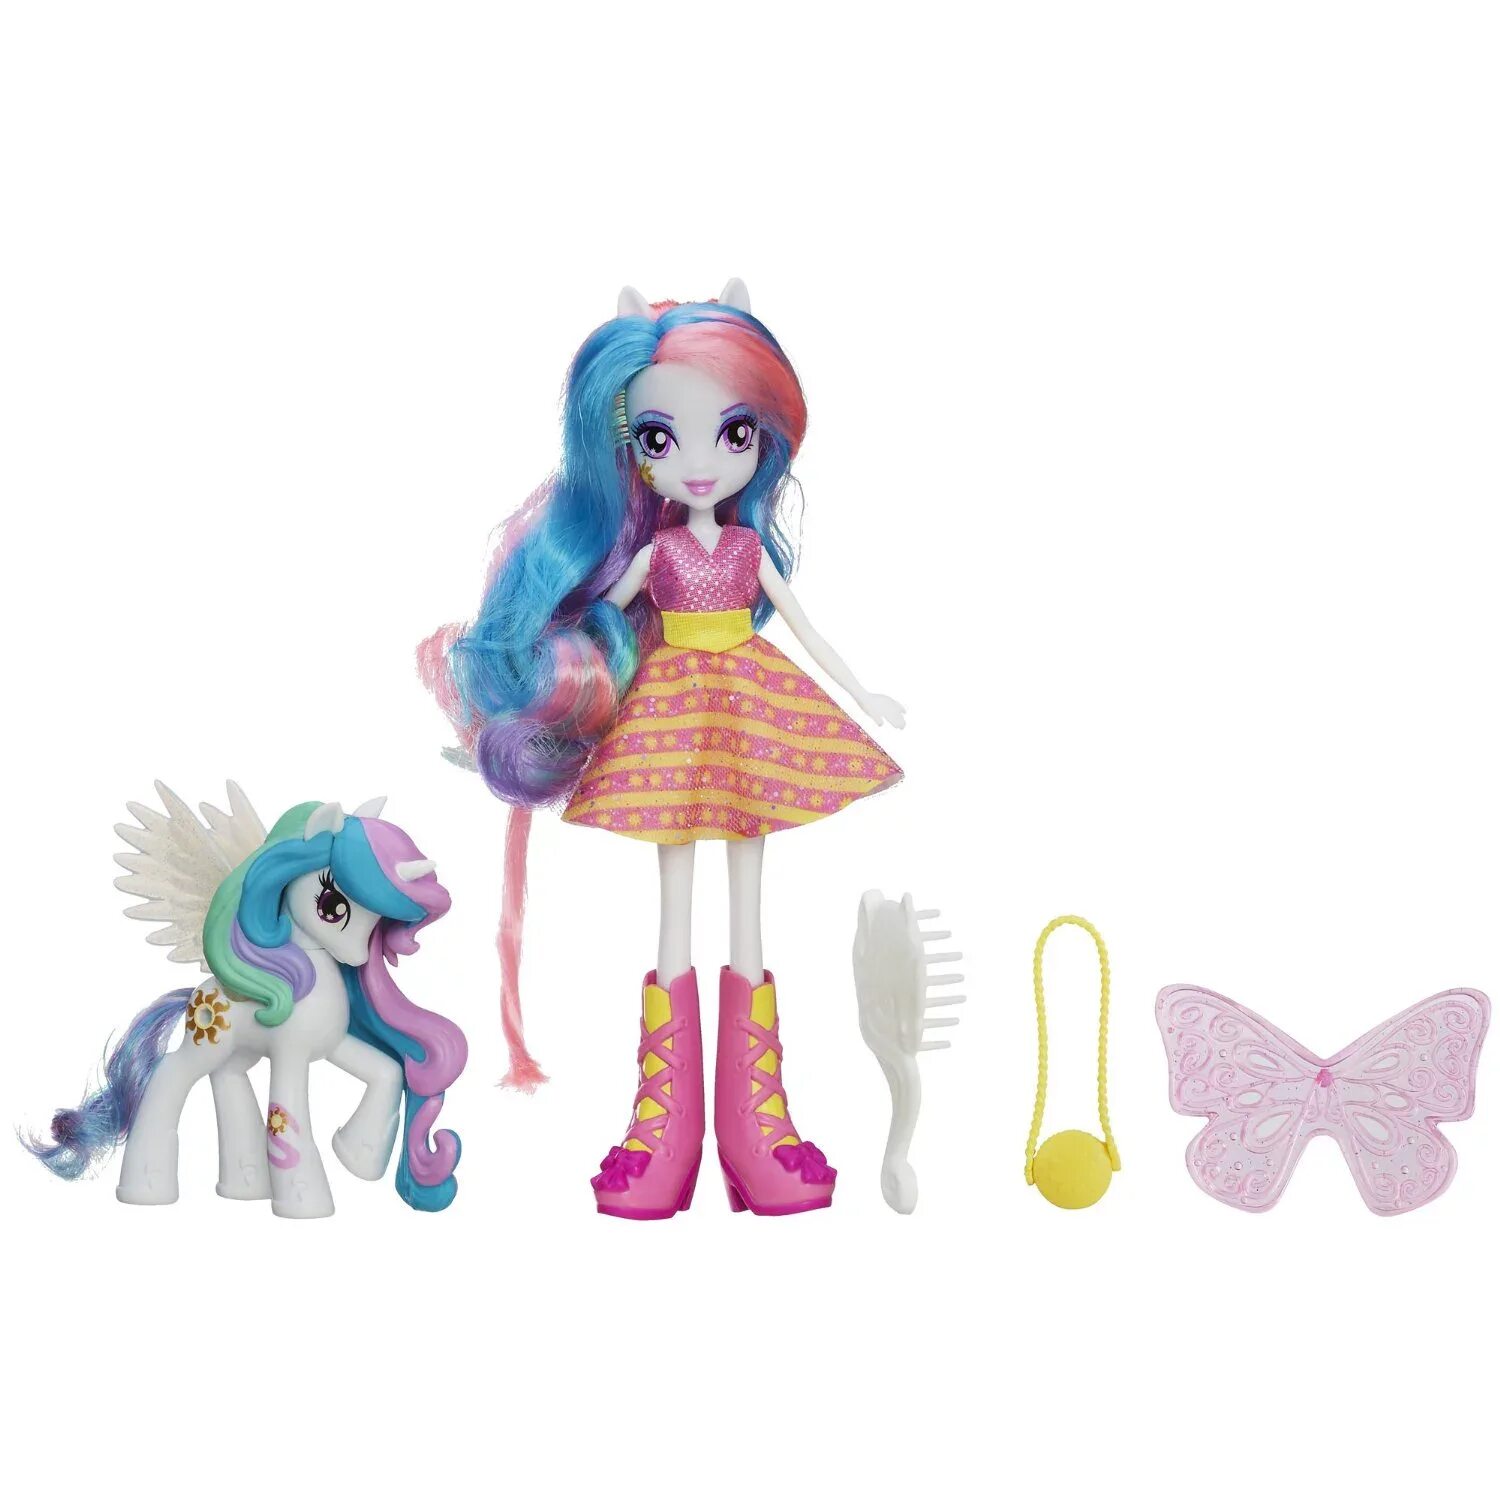 Куклы my little pony. Селестия Equestria girls кукла. Эквестрия герлз Селестия игрушка. Hasbro кукла my little Pony. Кукла Селестия my little Pony.